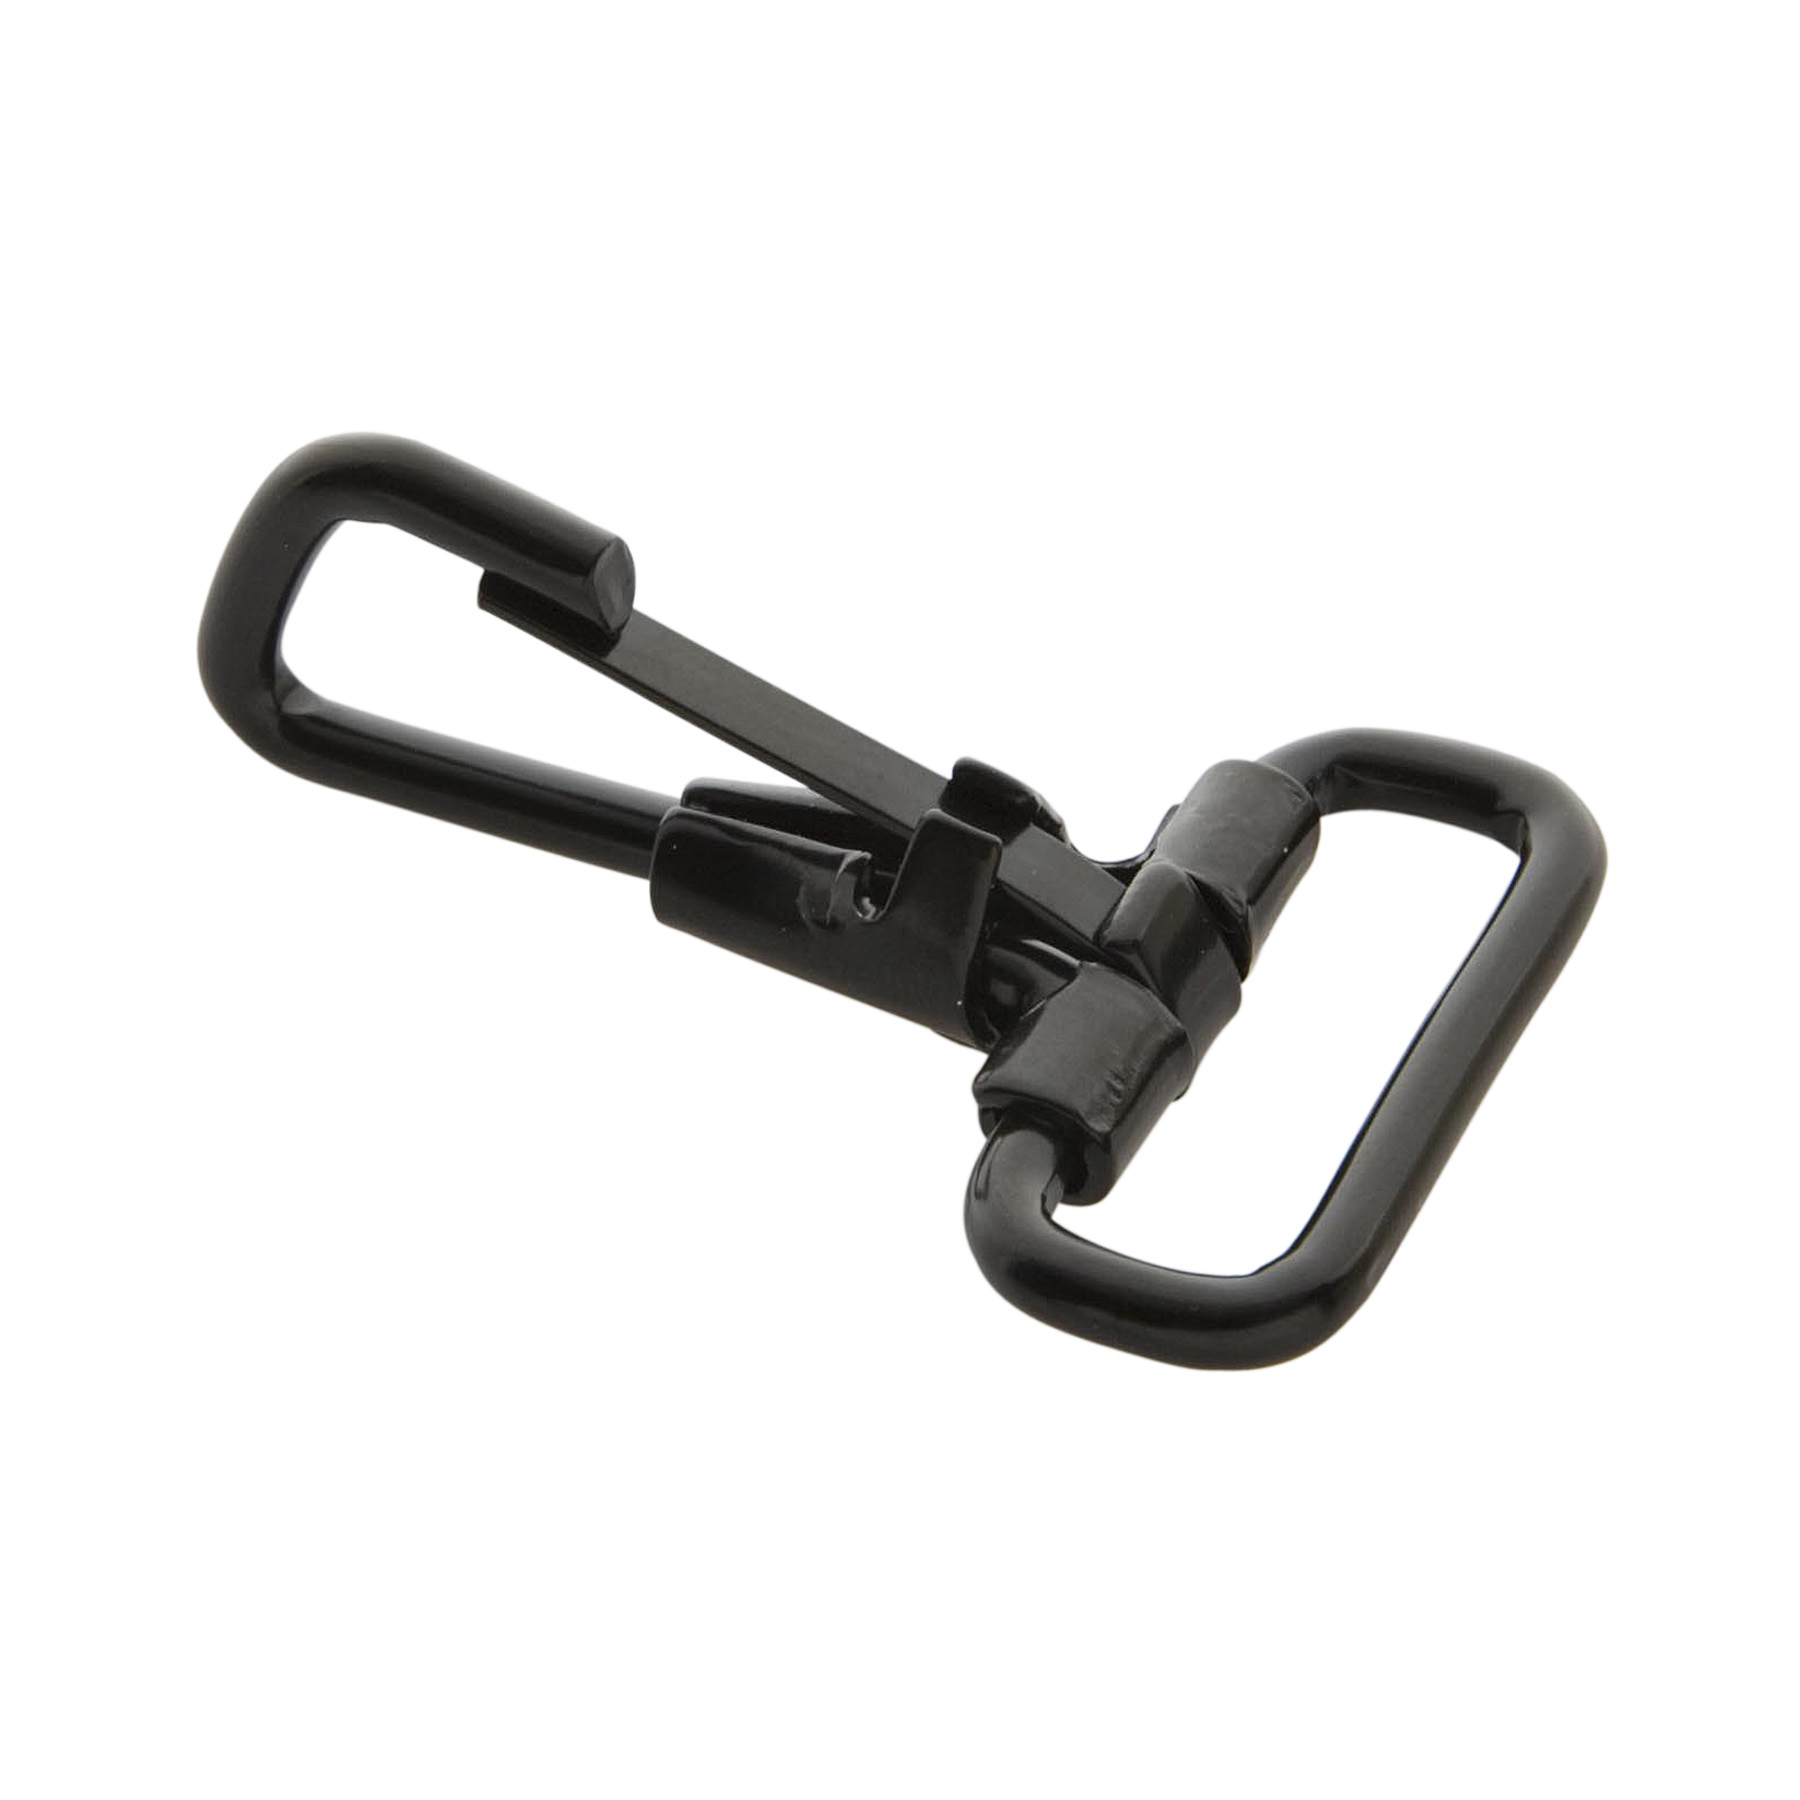 1 in Dull Black Resin Snap Hook - Industrial Snap Hooks, Spring Snap Hooks  - Granat Industries, Inc.